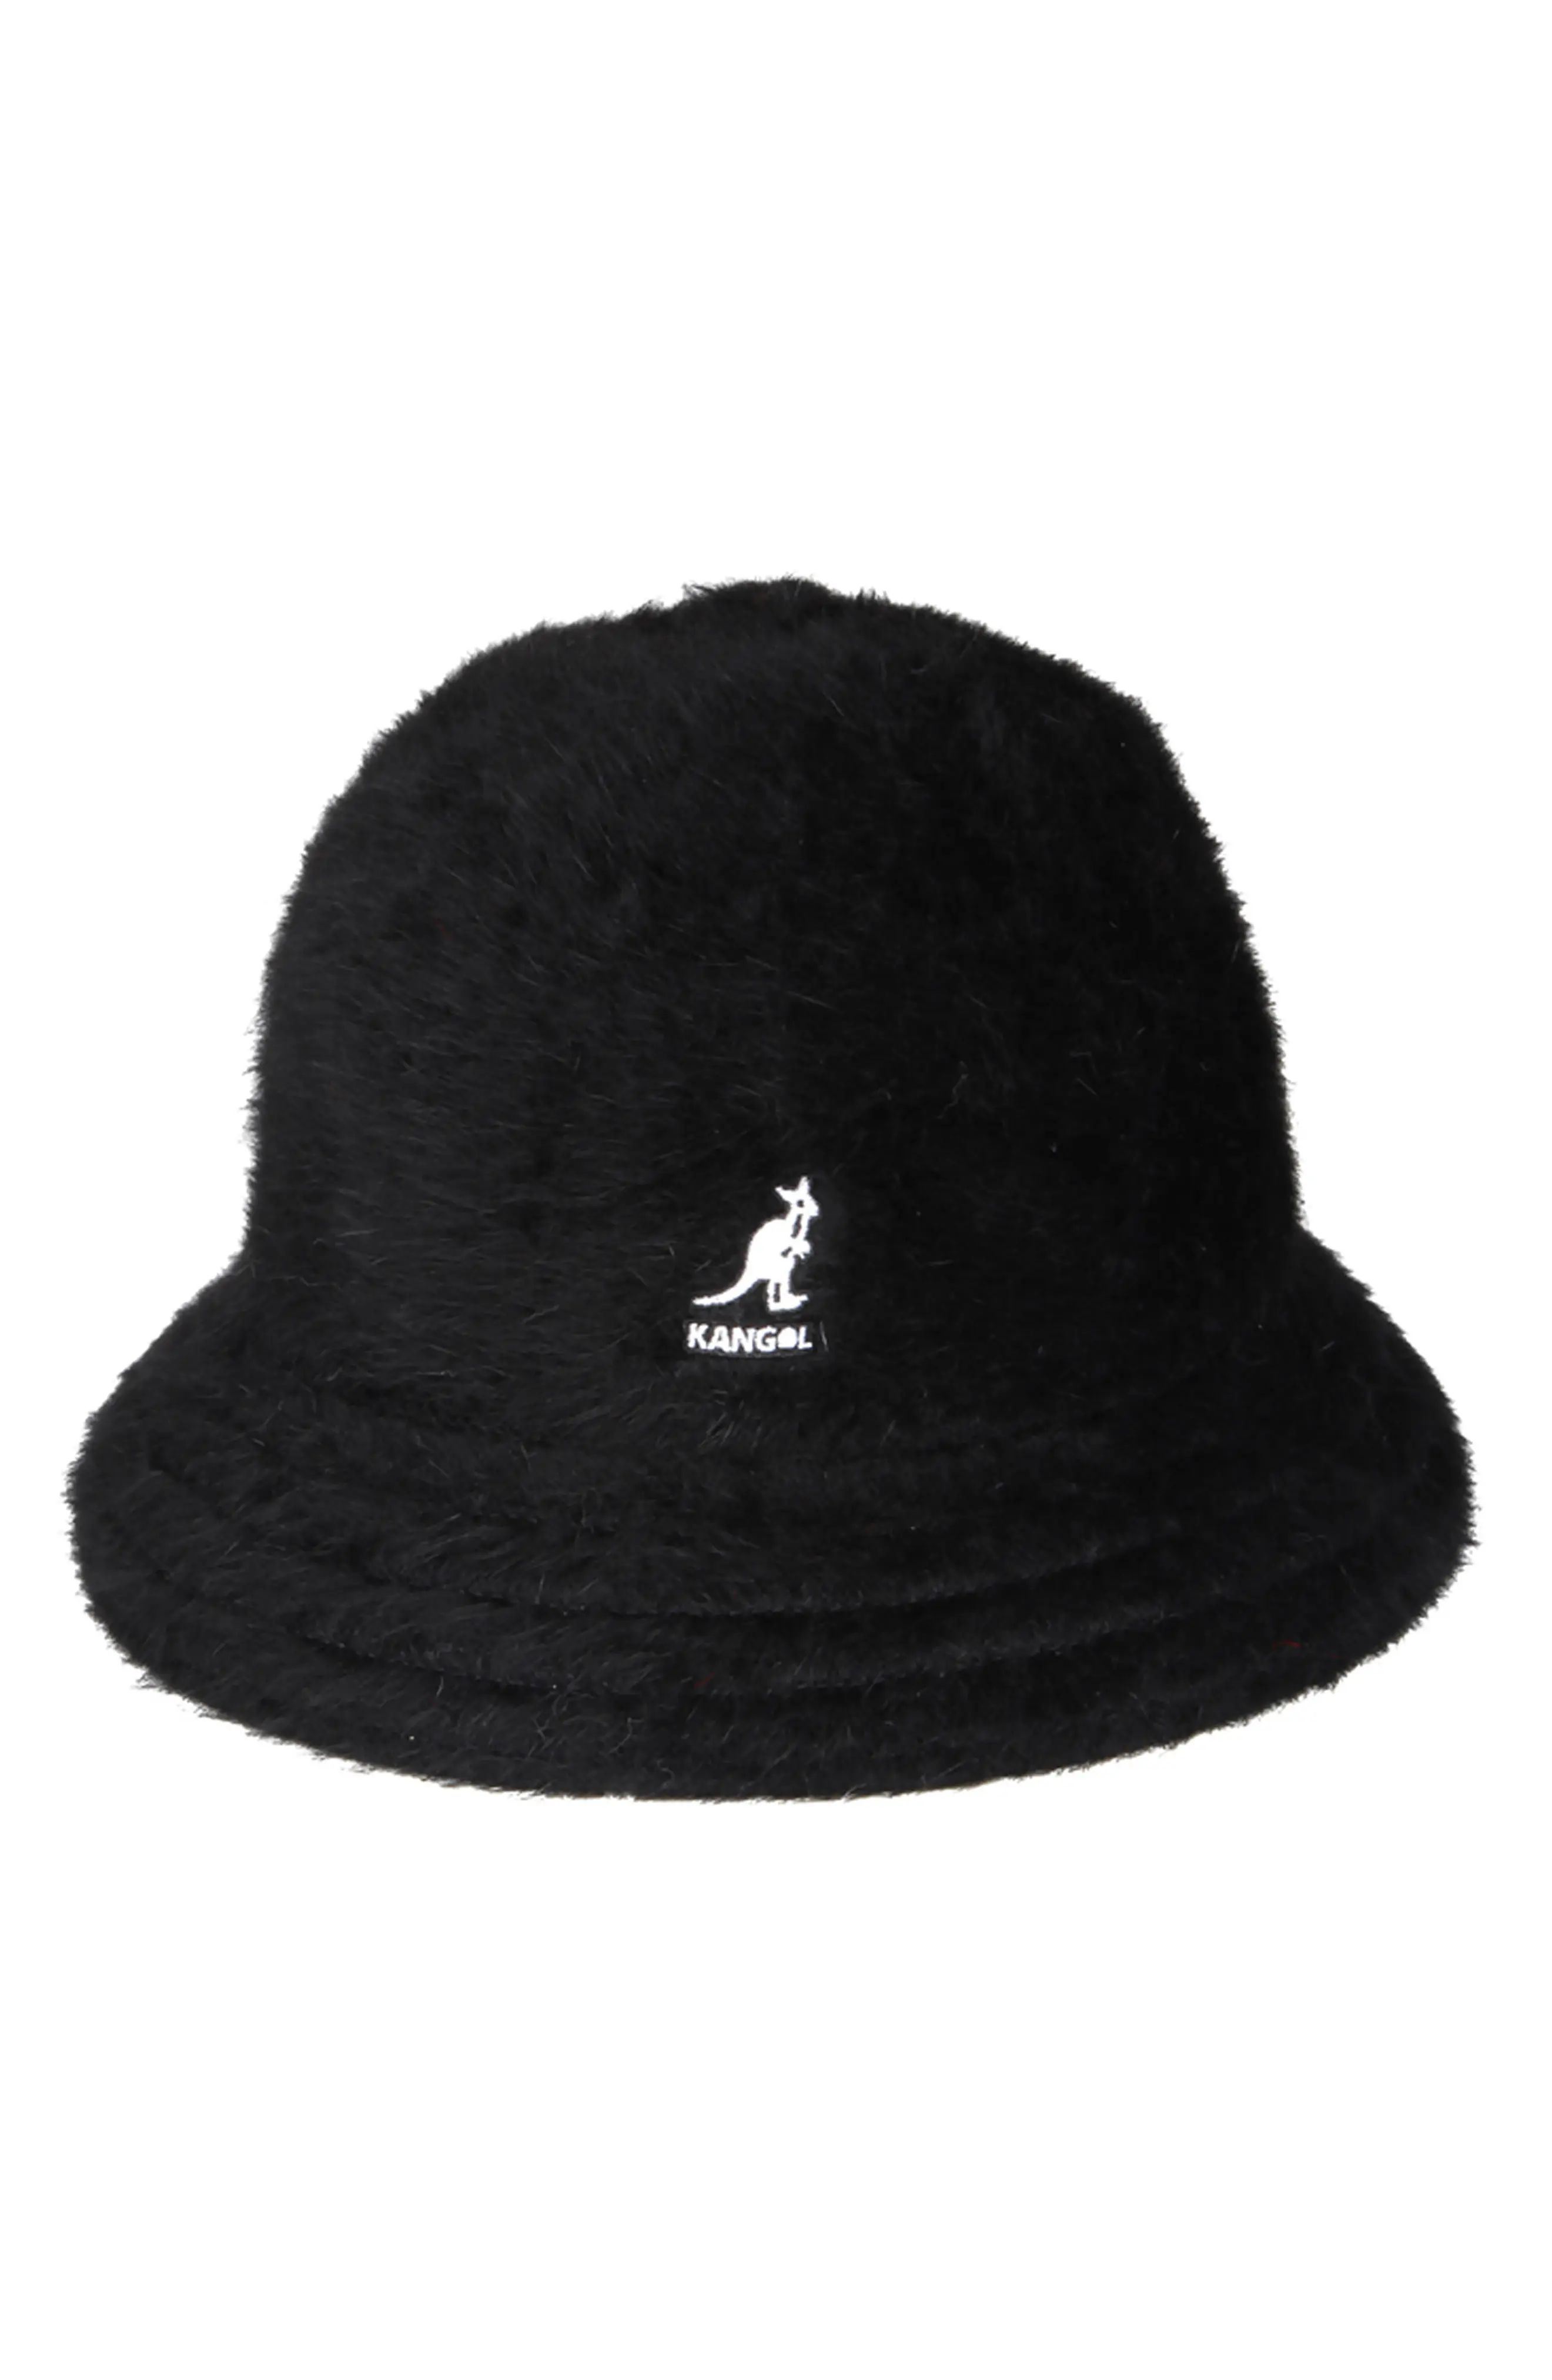 Kangol Furgora Casual Bucket Hat, Size Small in Black at Nordstrom | Nordstrom